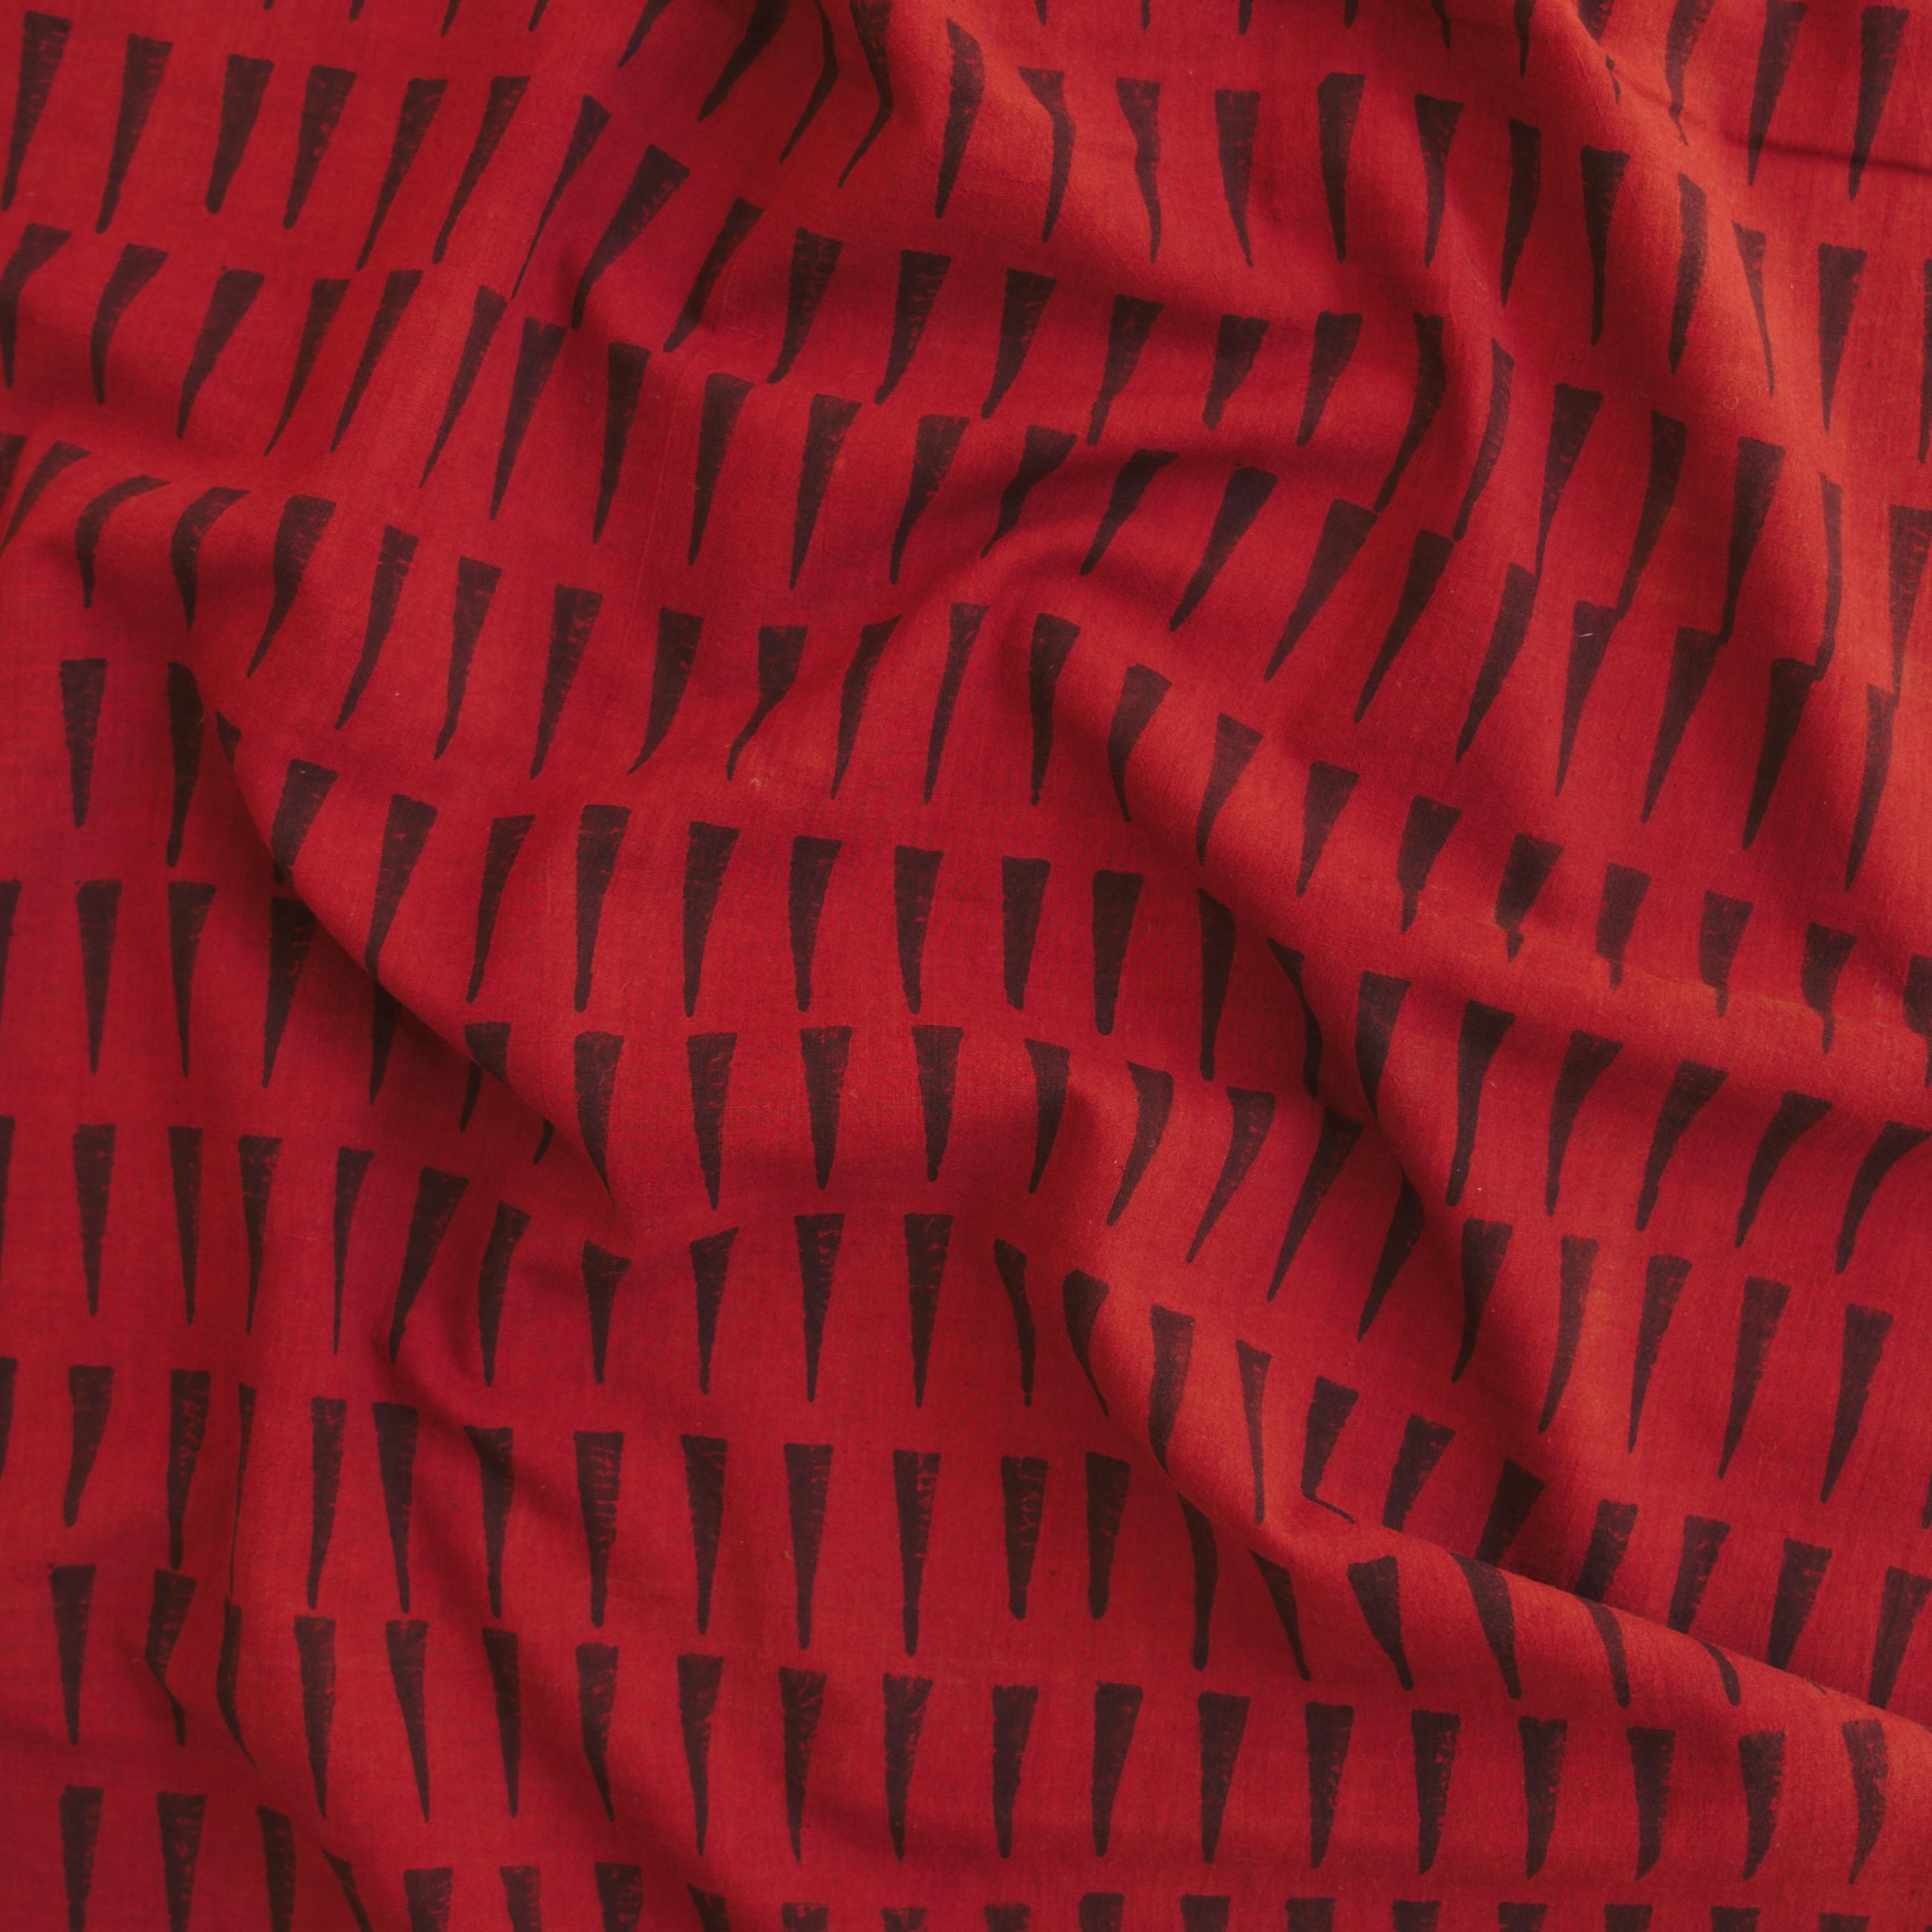 100% Block-Printed Cotton Fabric From India - Ajrak - Alizarin Black Spikes Print